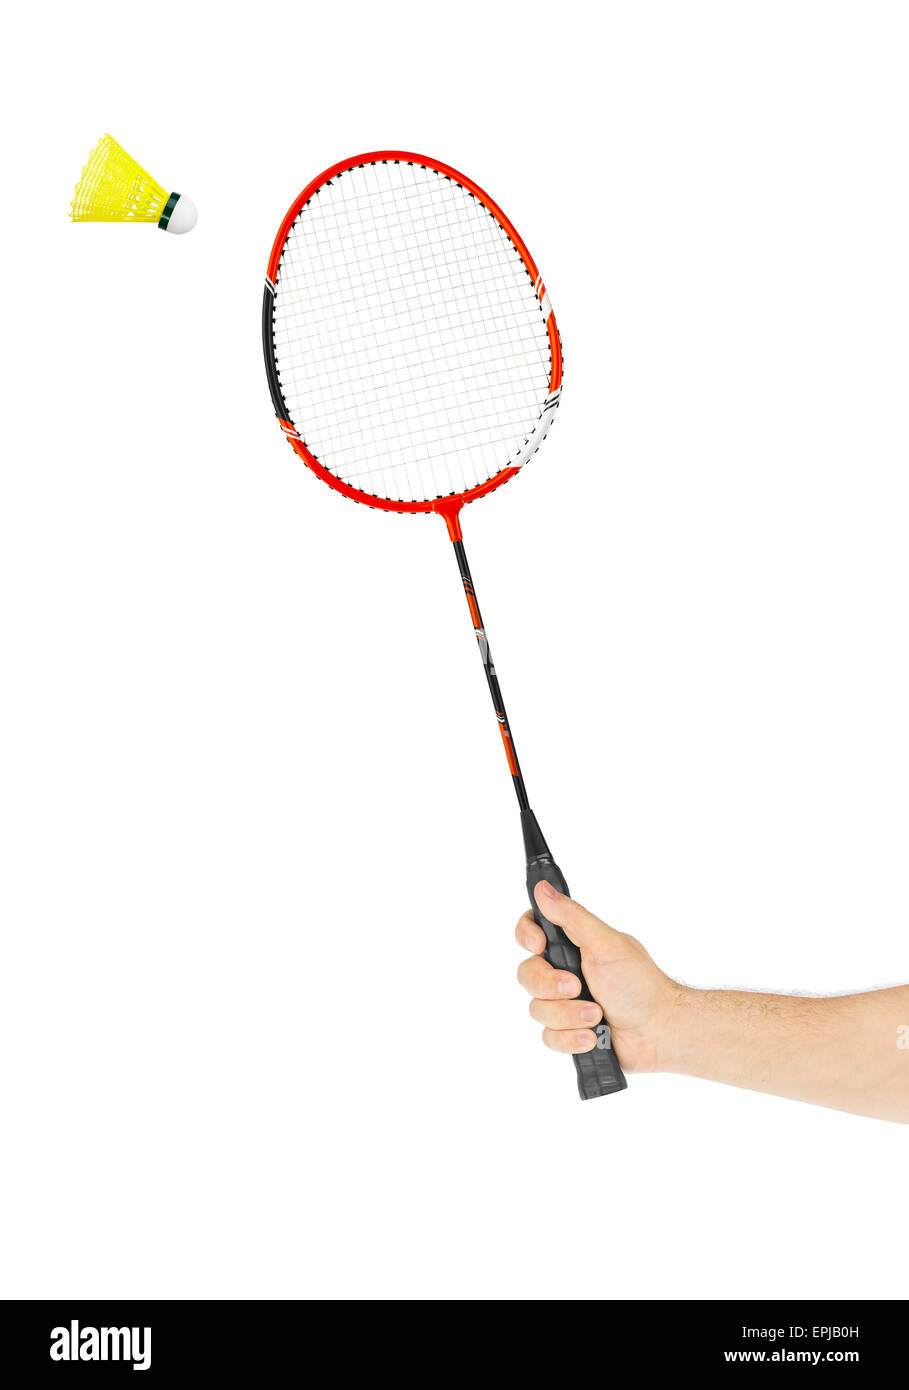 Hand with badminton racket Stock Photo - Alamy